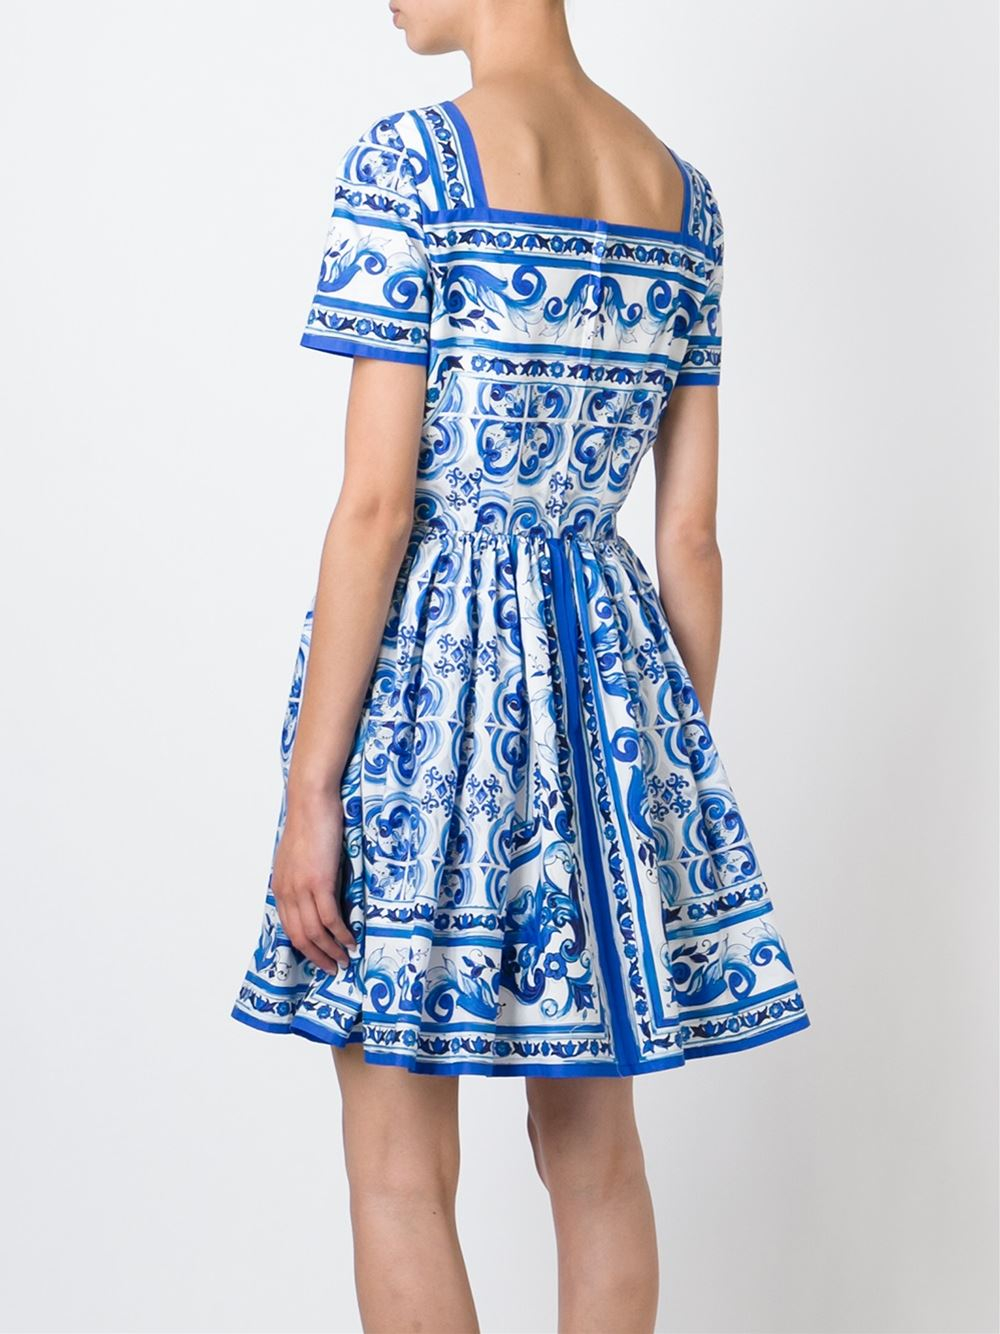 Dolce & Gabbana Cotton 'Majolica' Dress in Blue Print (Blue) - Lyst